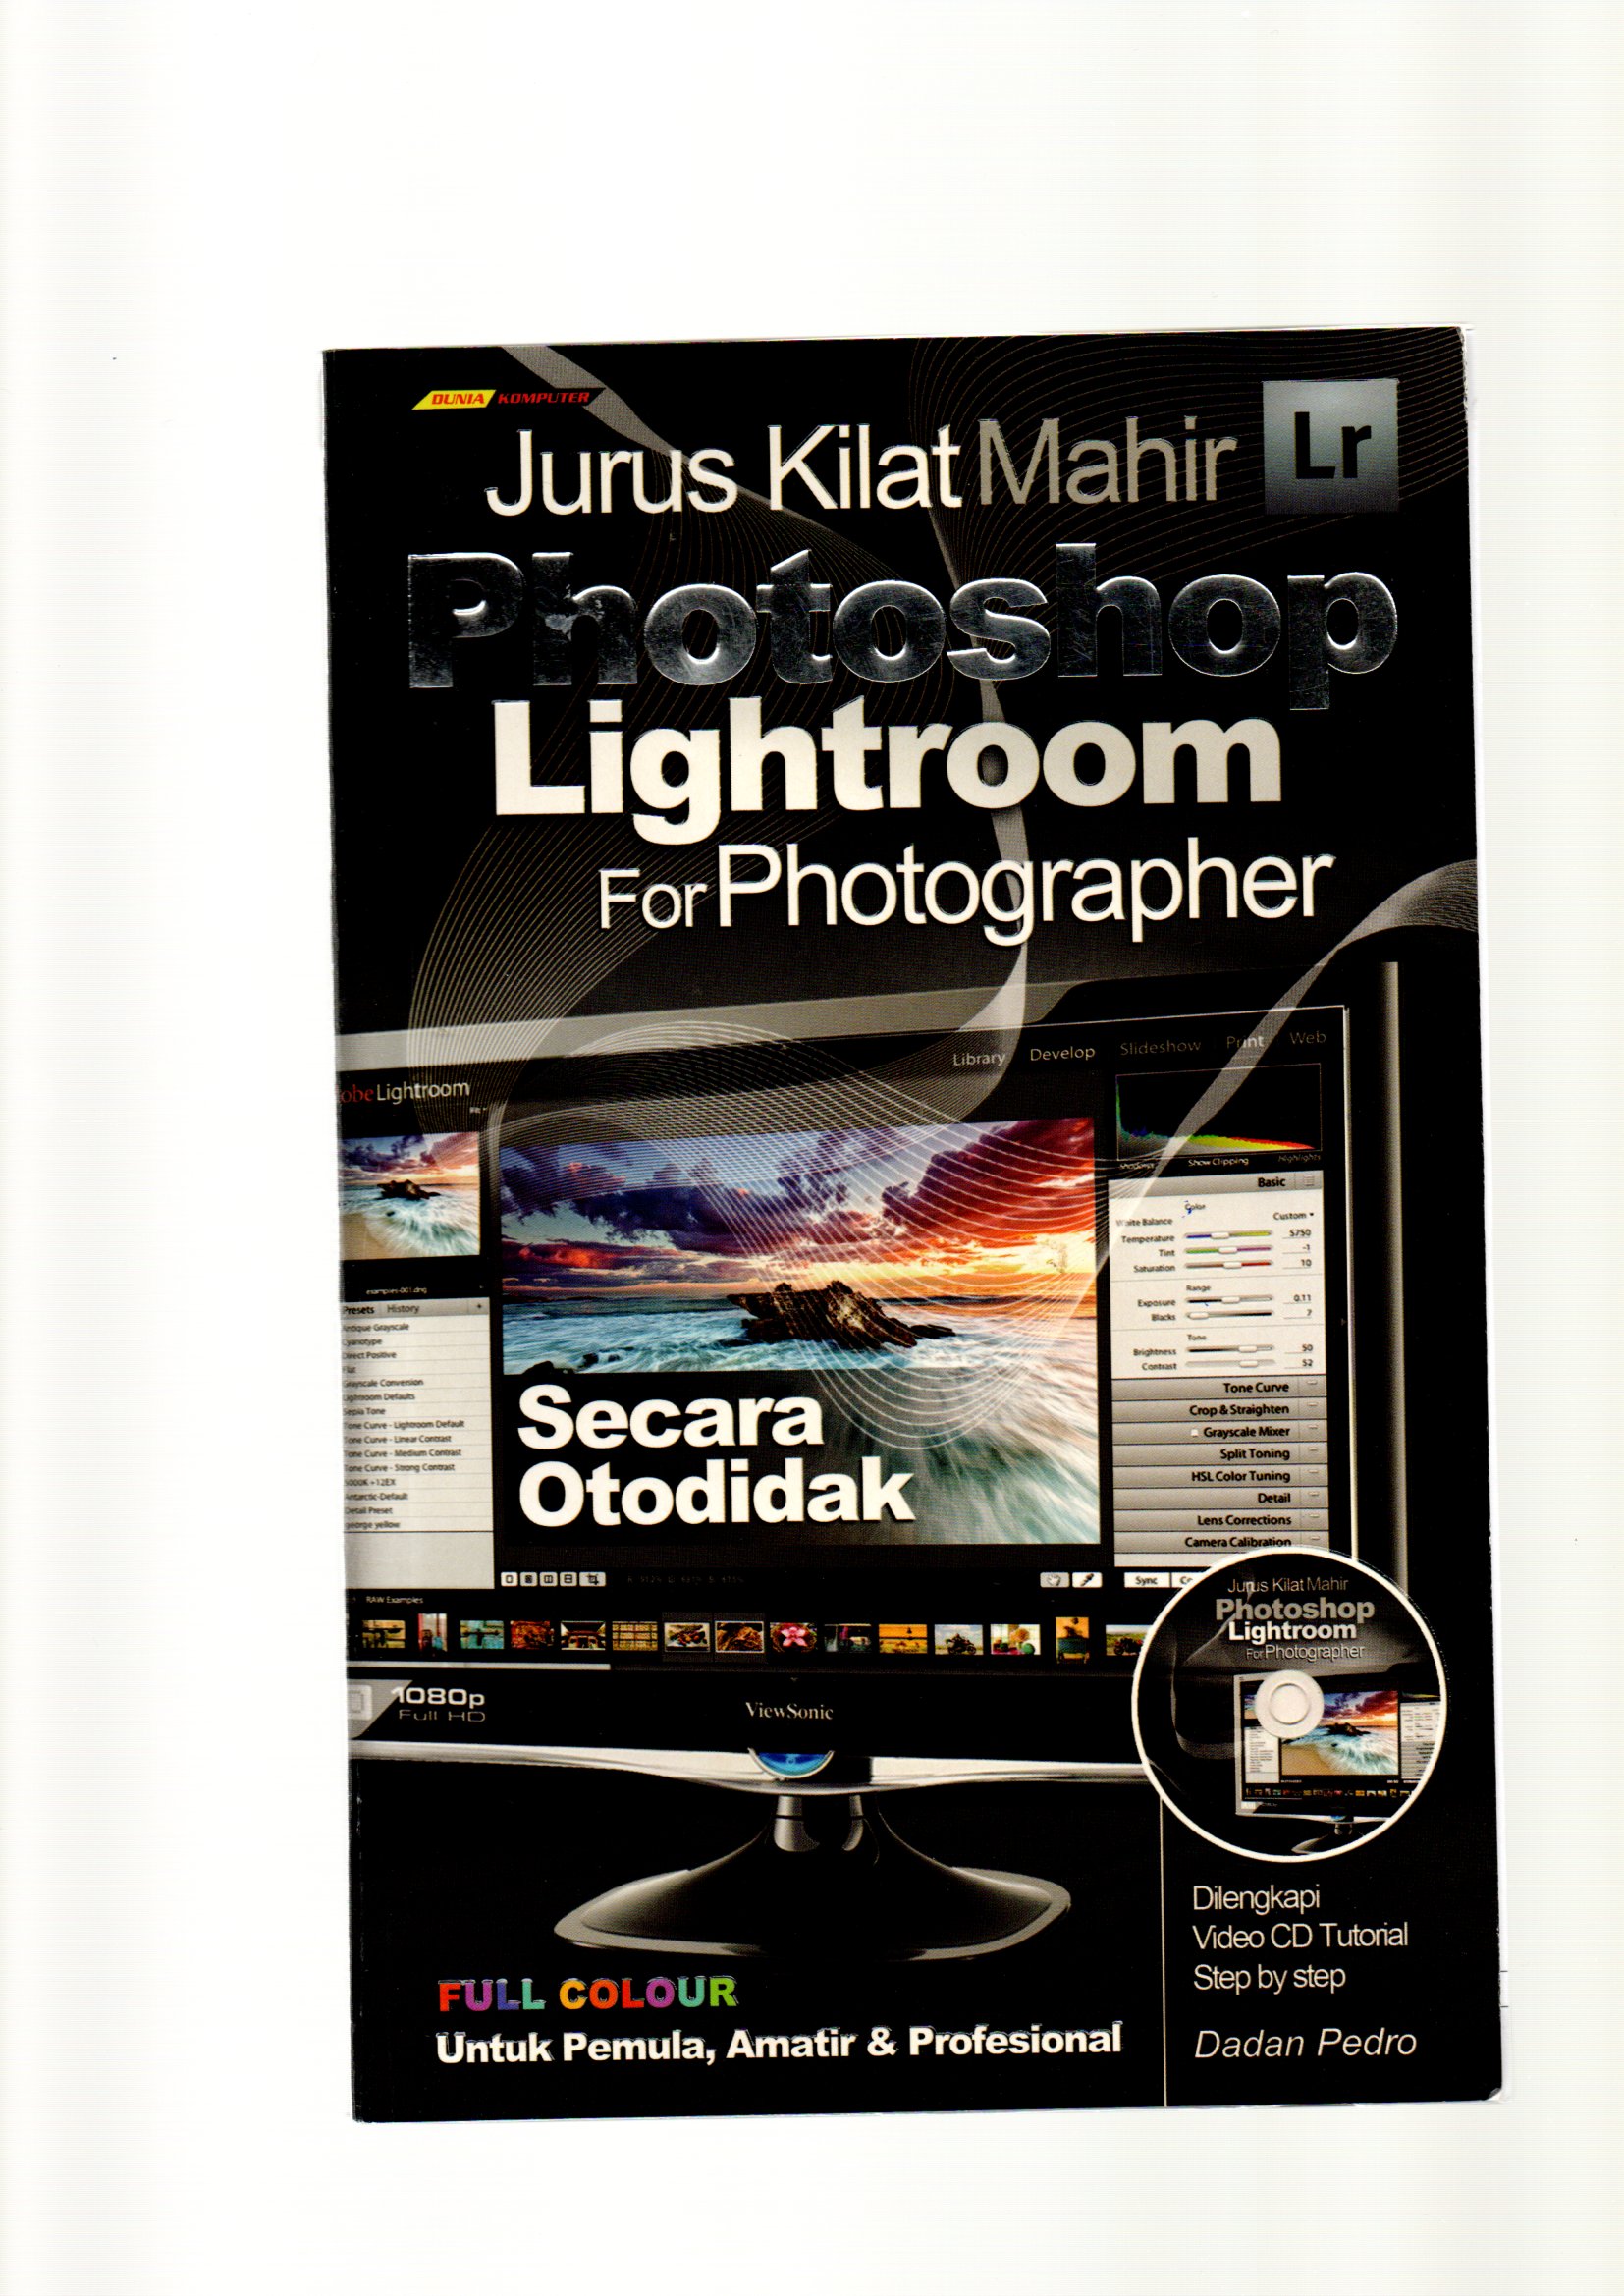 Jurus kilat mahir photoshop lightroom for photografer